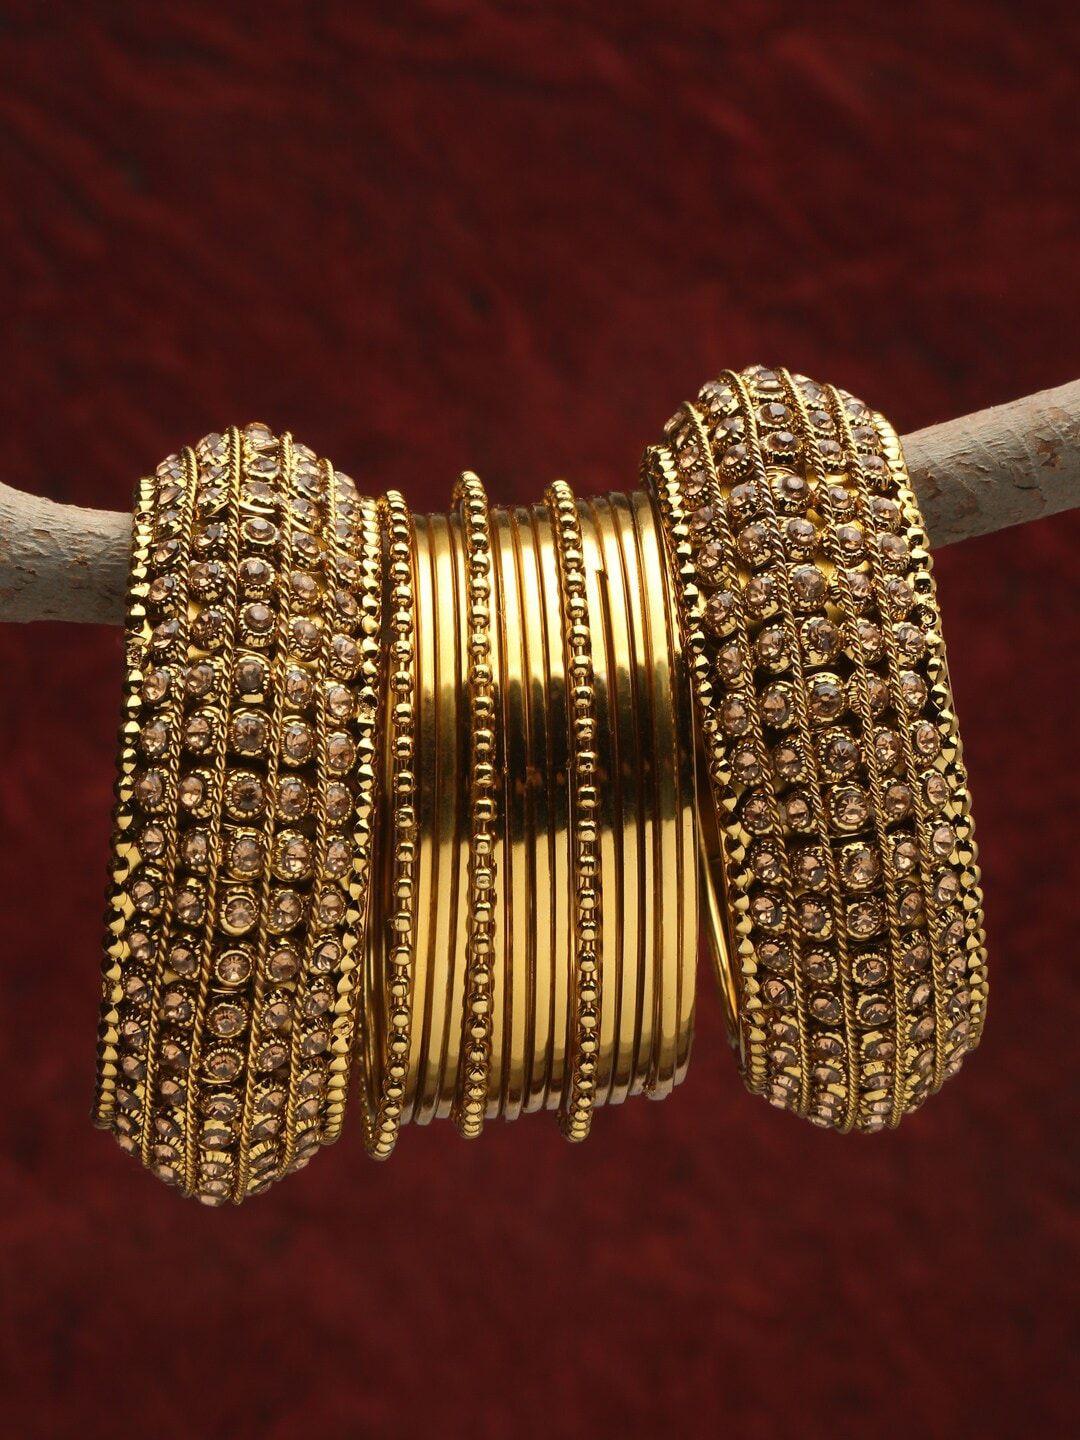 shining diva set of 17 gold-plated crystal-studded bangles